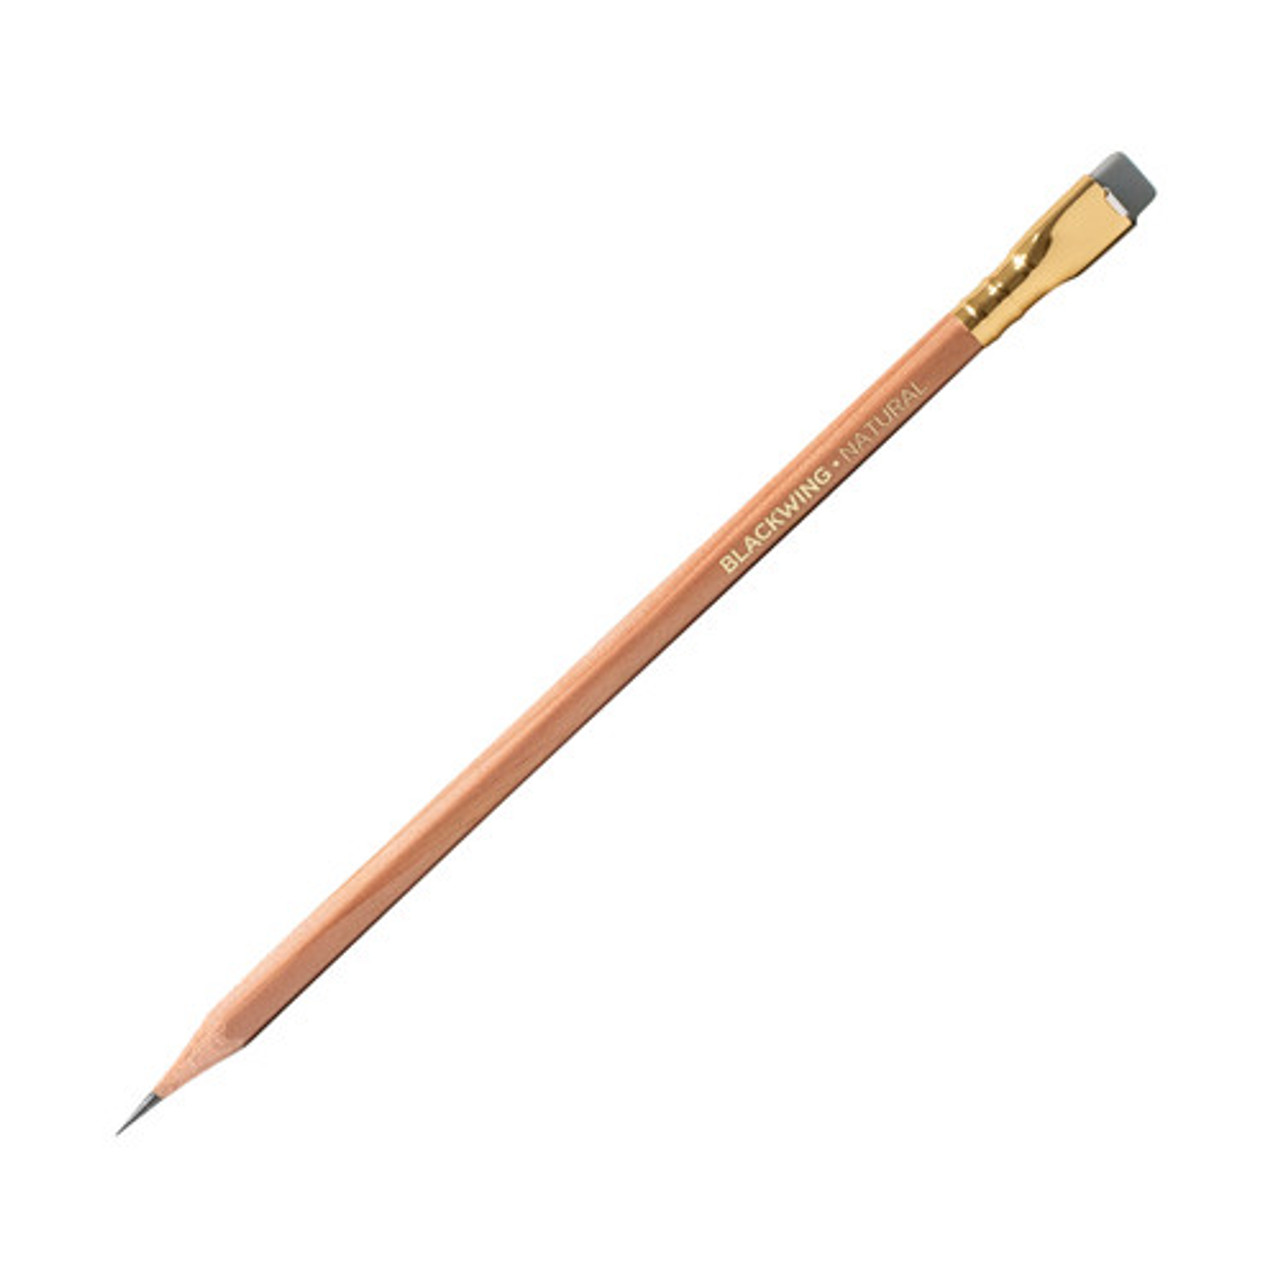 Blackwing - Pencil Extender